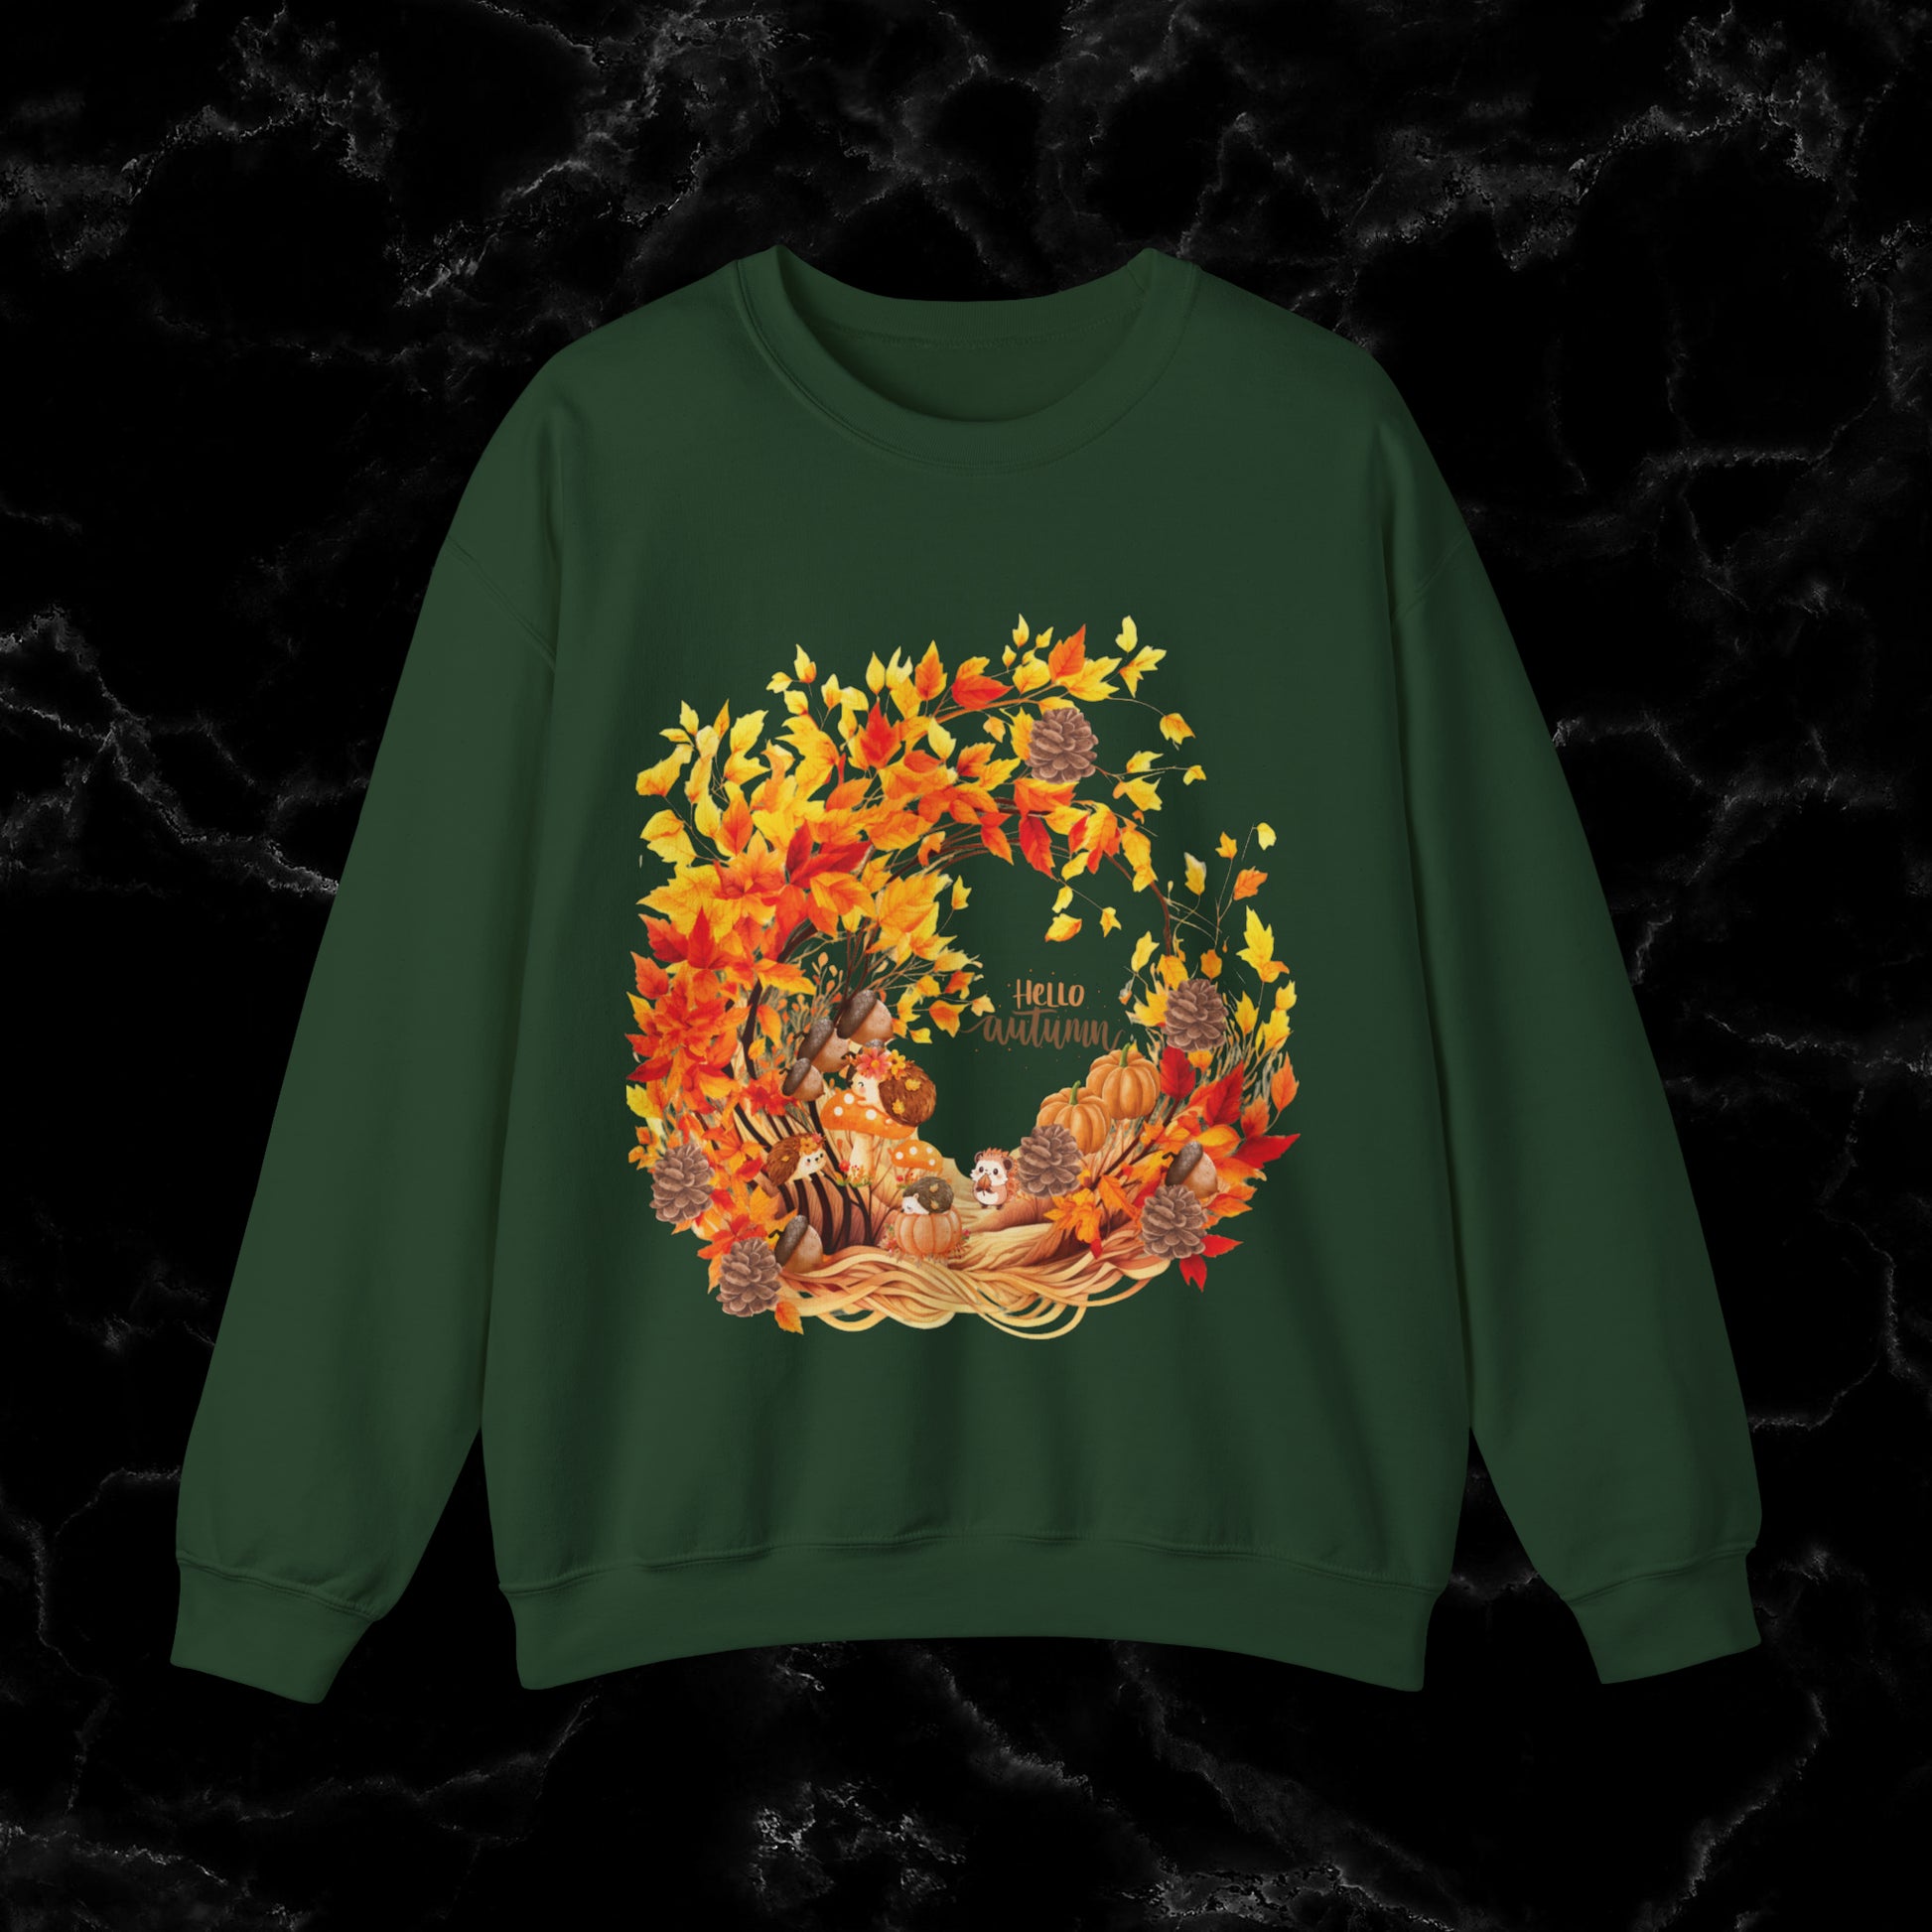 Hello Autumn Sweatshirt | Fall Design - Fall Seasonal Sweatshirt - Autumn Design Sweatshirt S Forest Green 